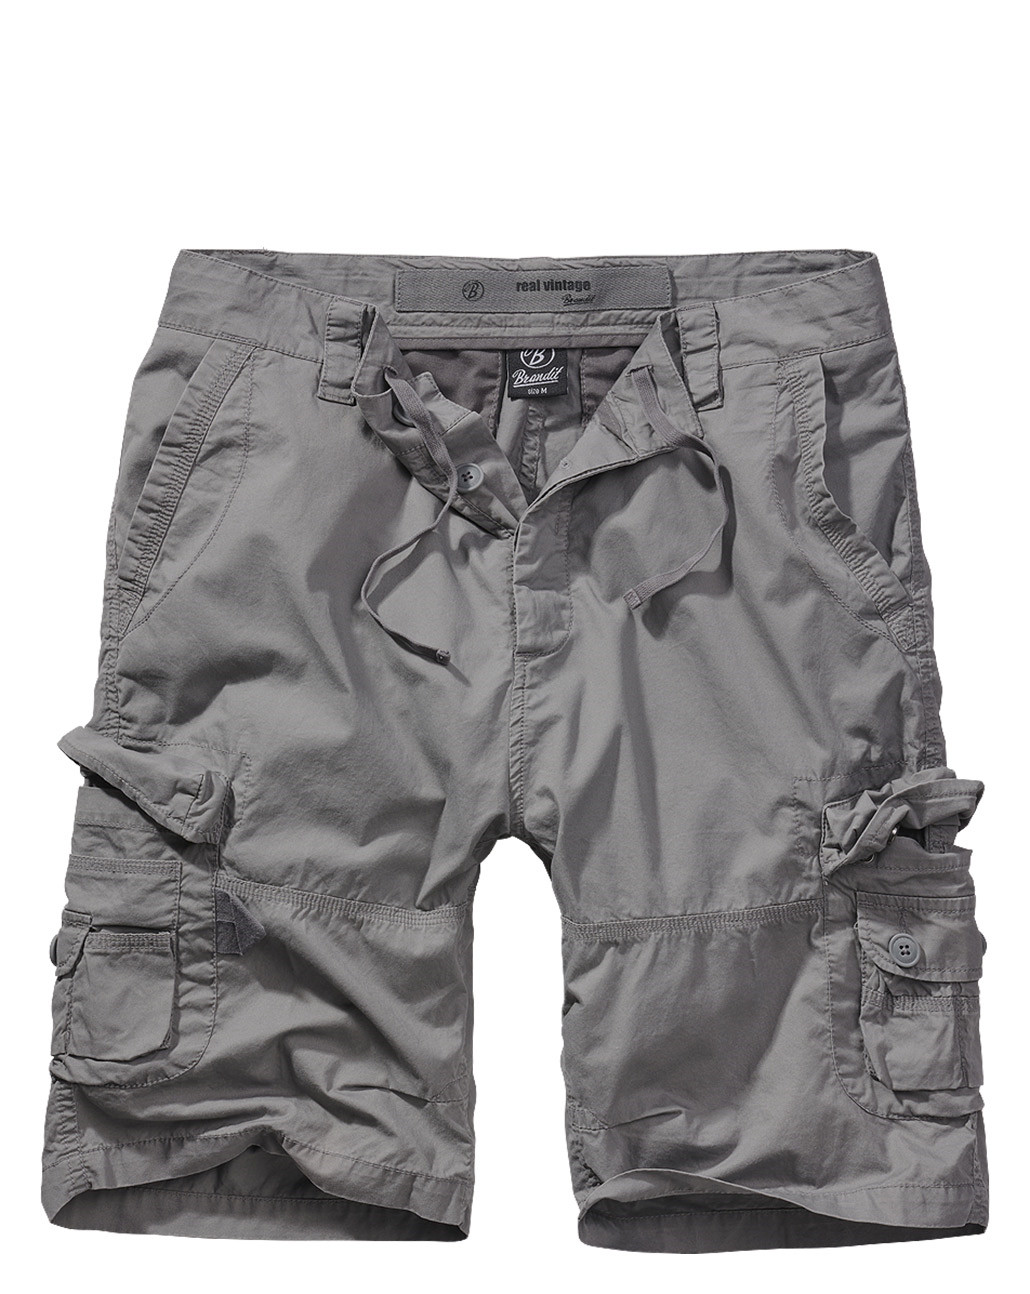 Brandit Ty Shorts (Charcoal, 4XL)